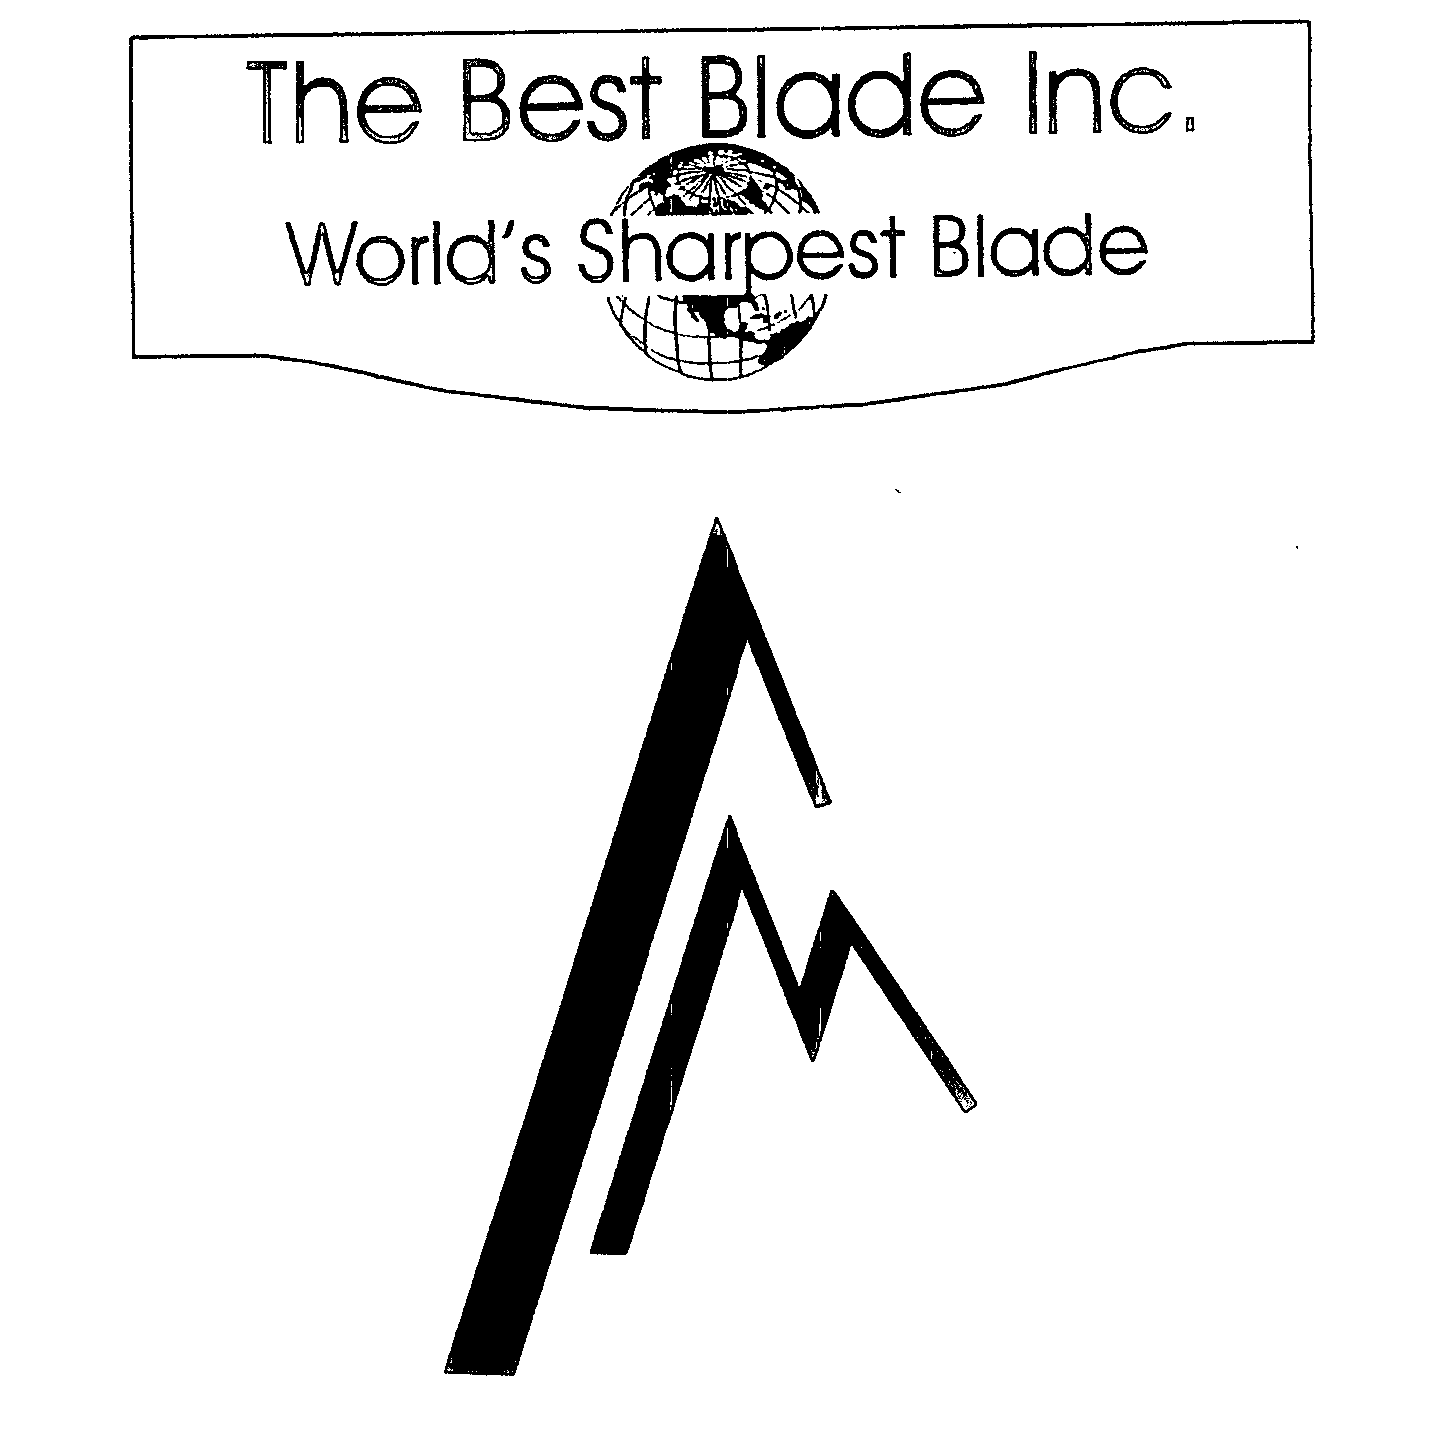  AM THE BEST BLADE INC. WORLD'S SHARPEST BLADE